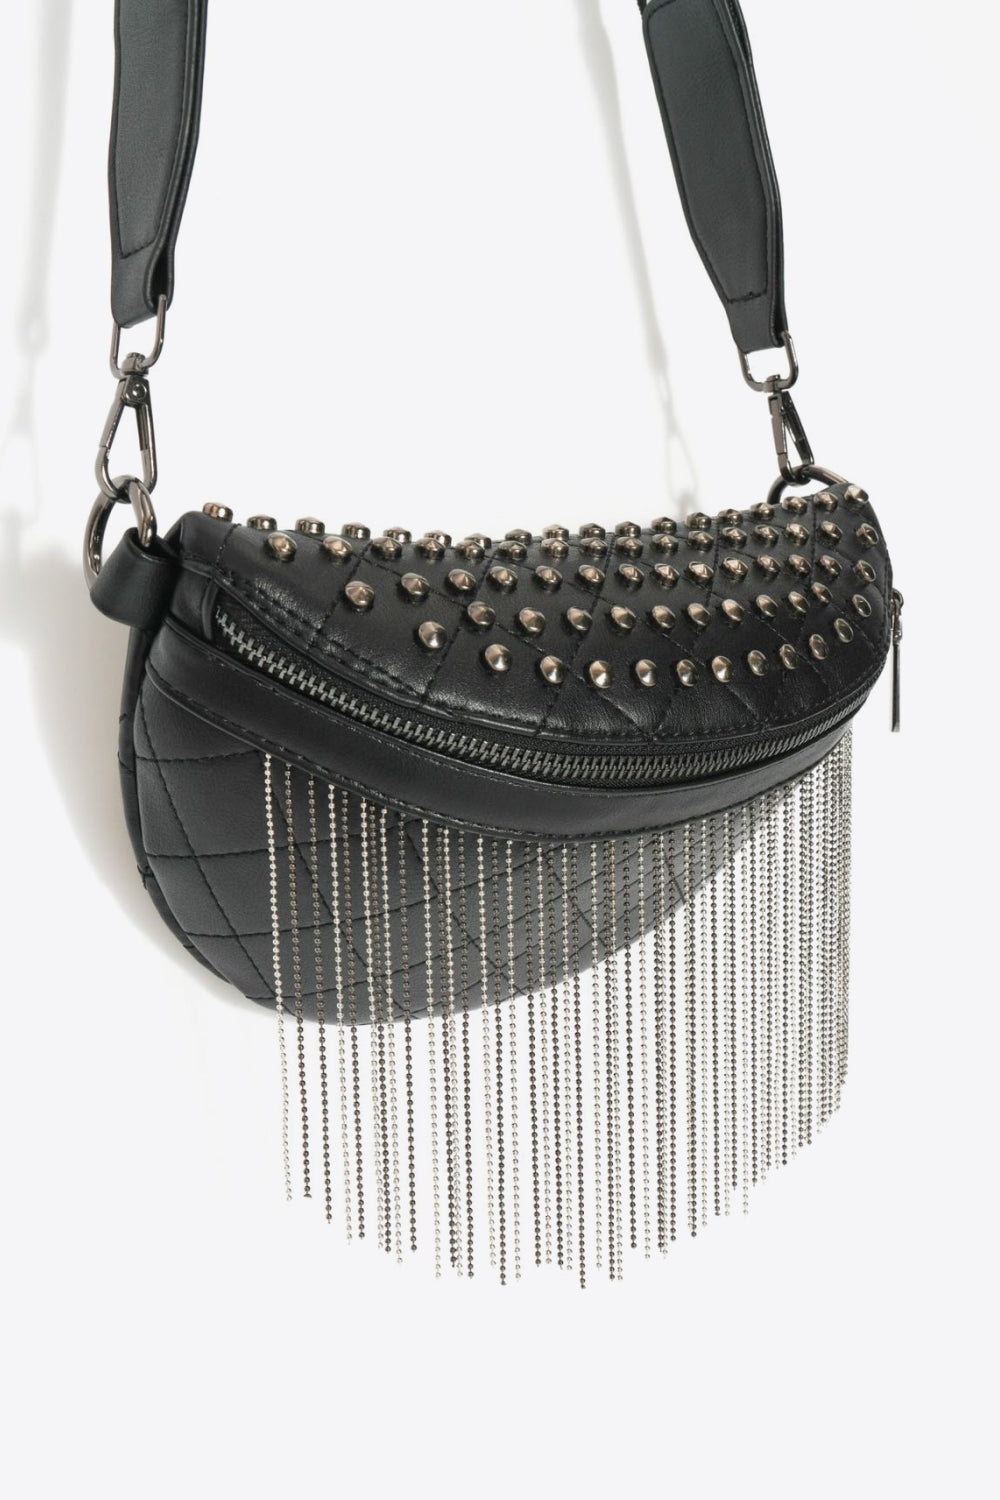 Baeful PU Leather Studded Sling Bag with Fringes - AllIn Computer